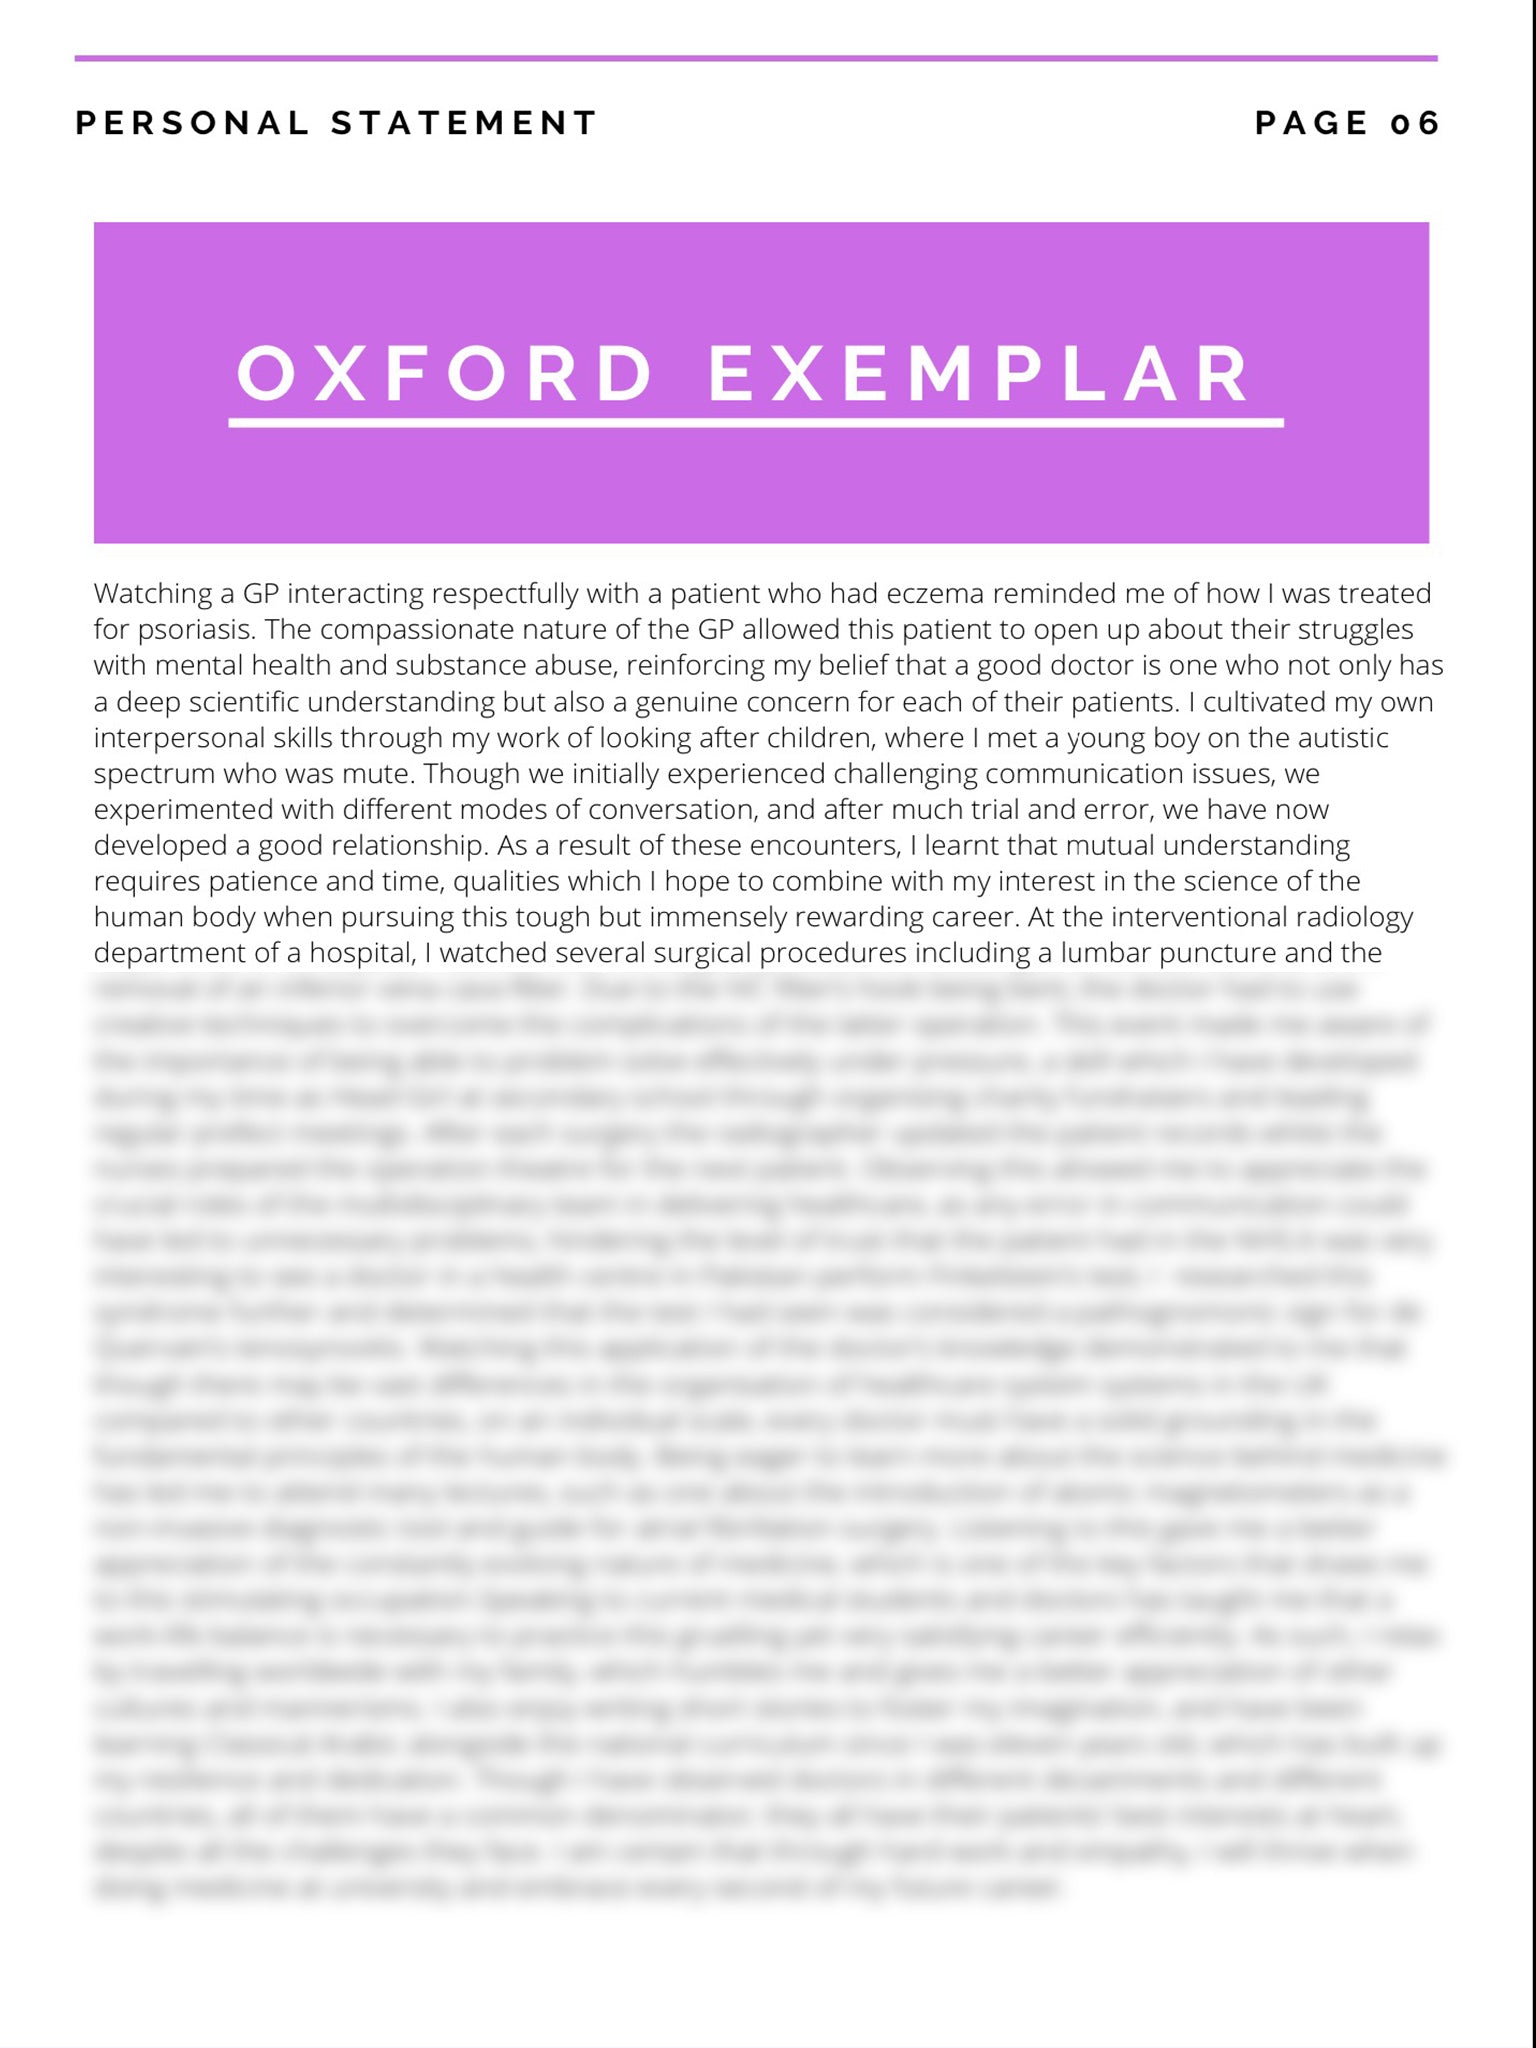 12 Medicine Personal Statements (Oxbridge) Exemplars | The Complete Guide